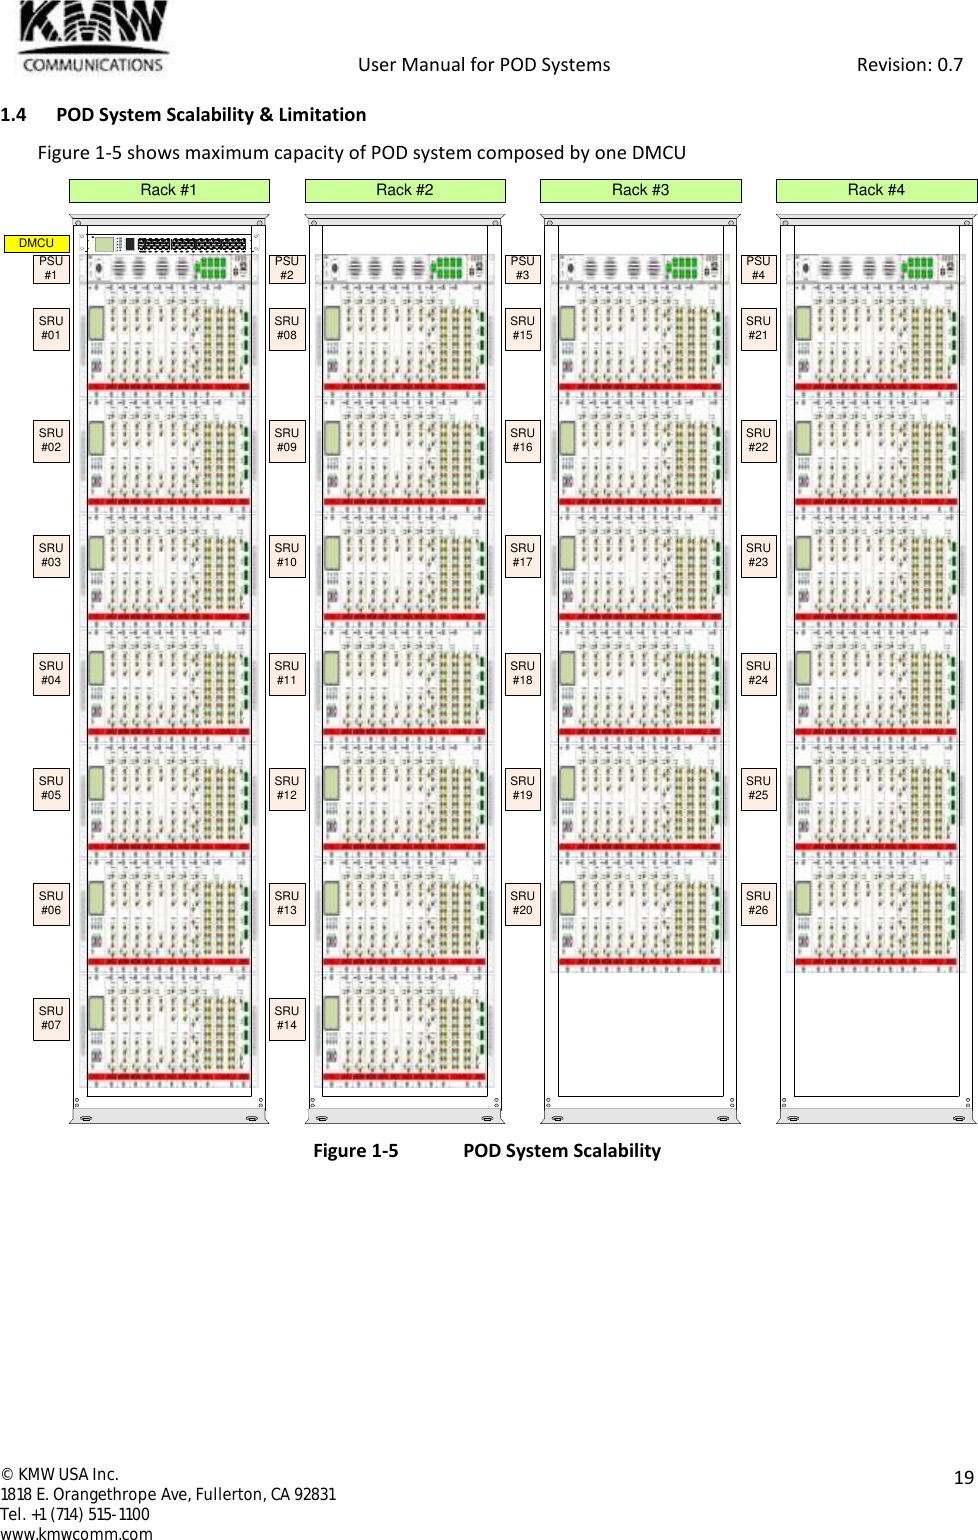            User Manual for POD Systems                                                     Revision: 0.7  ©  KMW USA Inc. 1818 E. Orangethrope Ave, Fullerton, CA 92831 Tel. +1 (714) 515-1100 www.kmwcomm.com  19  1.4 POD System Scalability &amp; Limitation Figure 1-5 shows maximum capacity of POD system composed by one DMCU  Figure 1-5  POD System Scalability    SDENTUpDownESCResetRunDMCUAlarmLinkHEAlarmRUAlarm12345 76 89 11 13 1510 12 14 1617 19 21 2318 20 22 2425 27 29 3126 28 30 32ModemWeb GUIKMWSD SD SDRack #1 Rack #2 Rack #3 Rack #4SRU#01SRU#02SRU#03SRU#04SRU#05SRU#06SRU#07SRU#08SRU#09SRU#10SRU#11SRU#12SRU#13SRU#14SRU#15SRU#16SRU#17SRU#18SRU#19SRU#20SRU#21SRU#22SRU#23SRU#24SRU#25SRU#26DMCUPSU#1 PSU#2 PSU#3 PSU#4